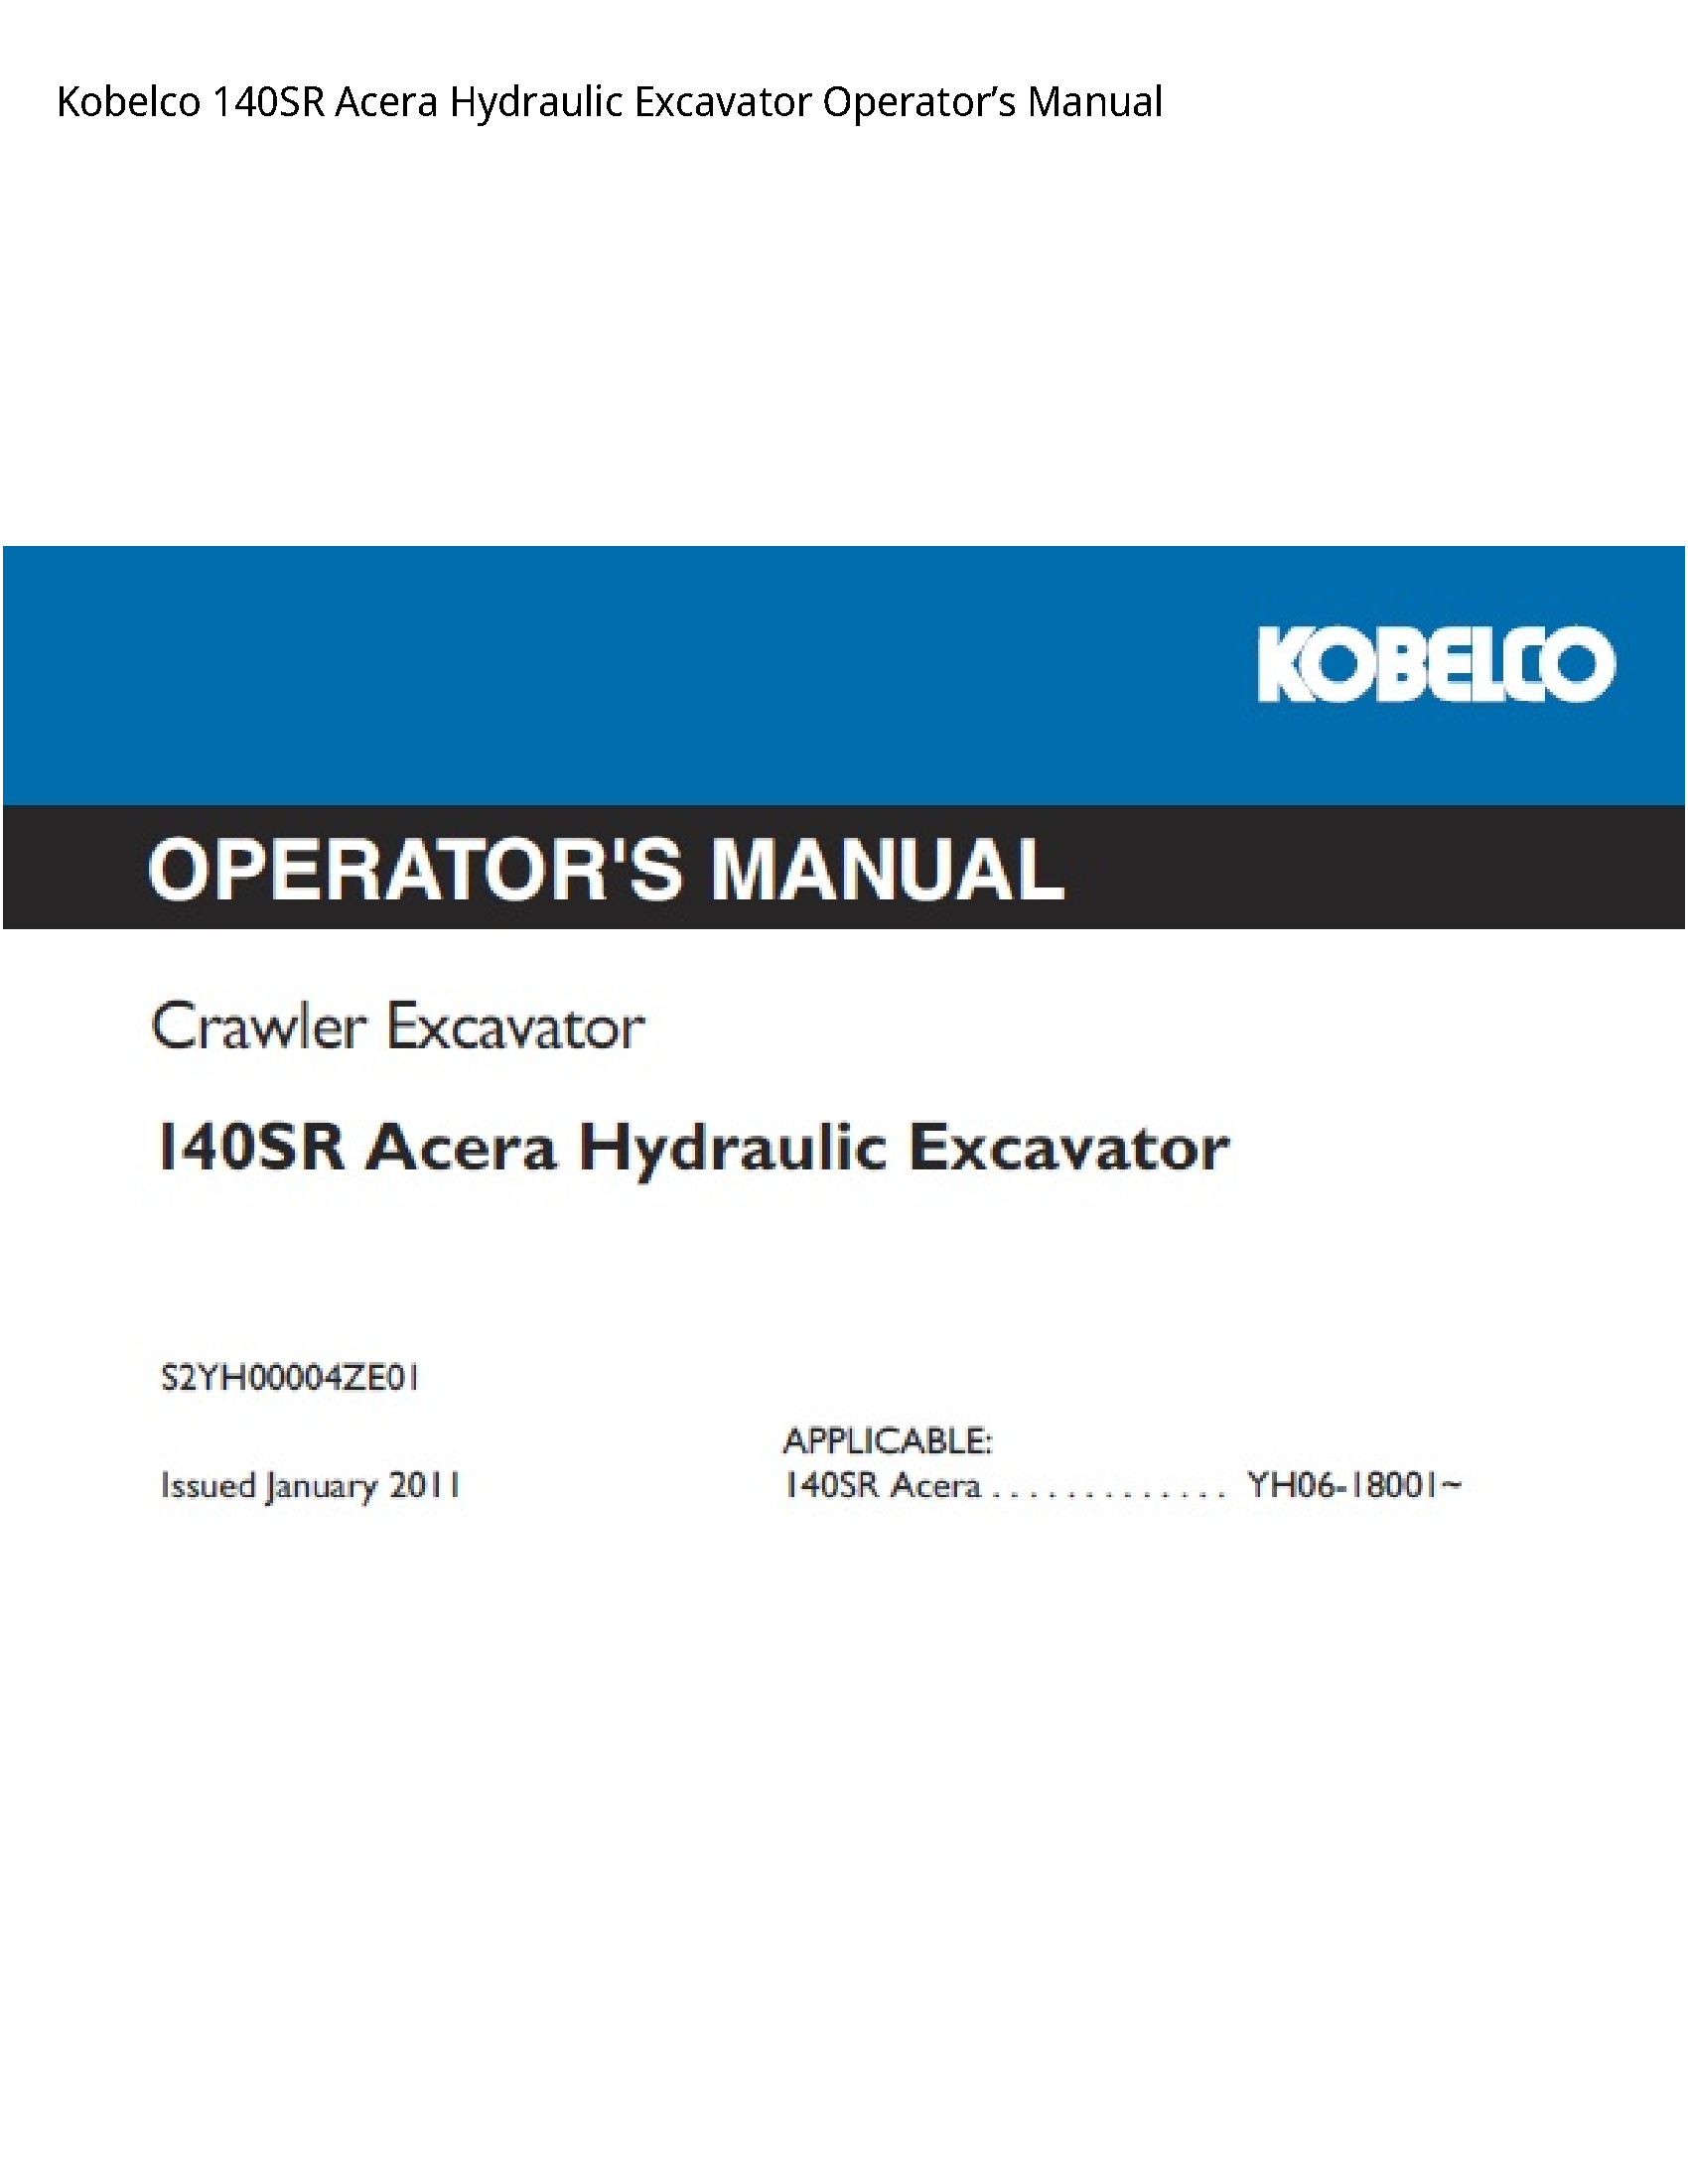 Kobelco 140SR Acera Hydraulic Excavator Operator’s manual